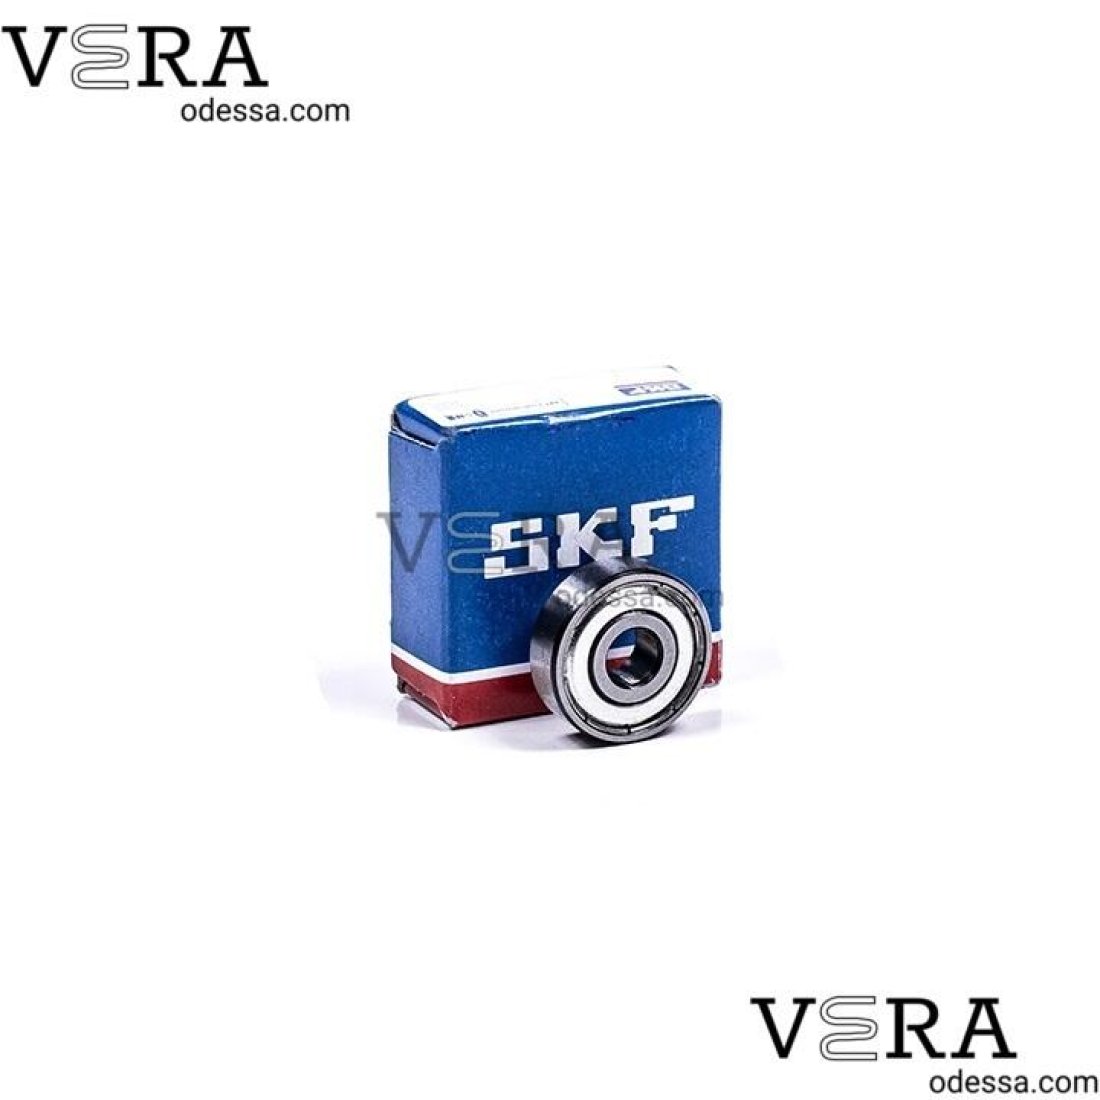 Подшипники Skf 608 – 2Z/c3 оптом, фотография 1